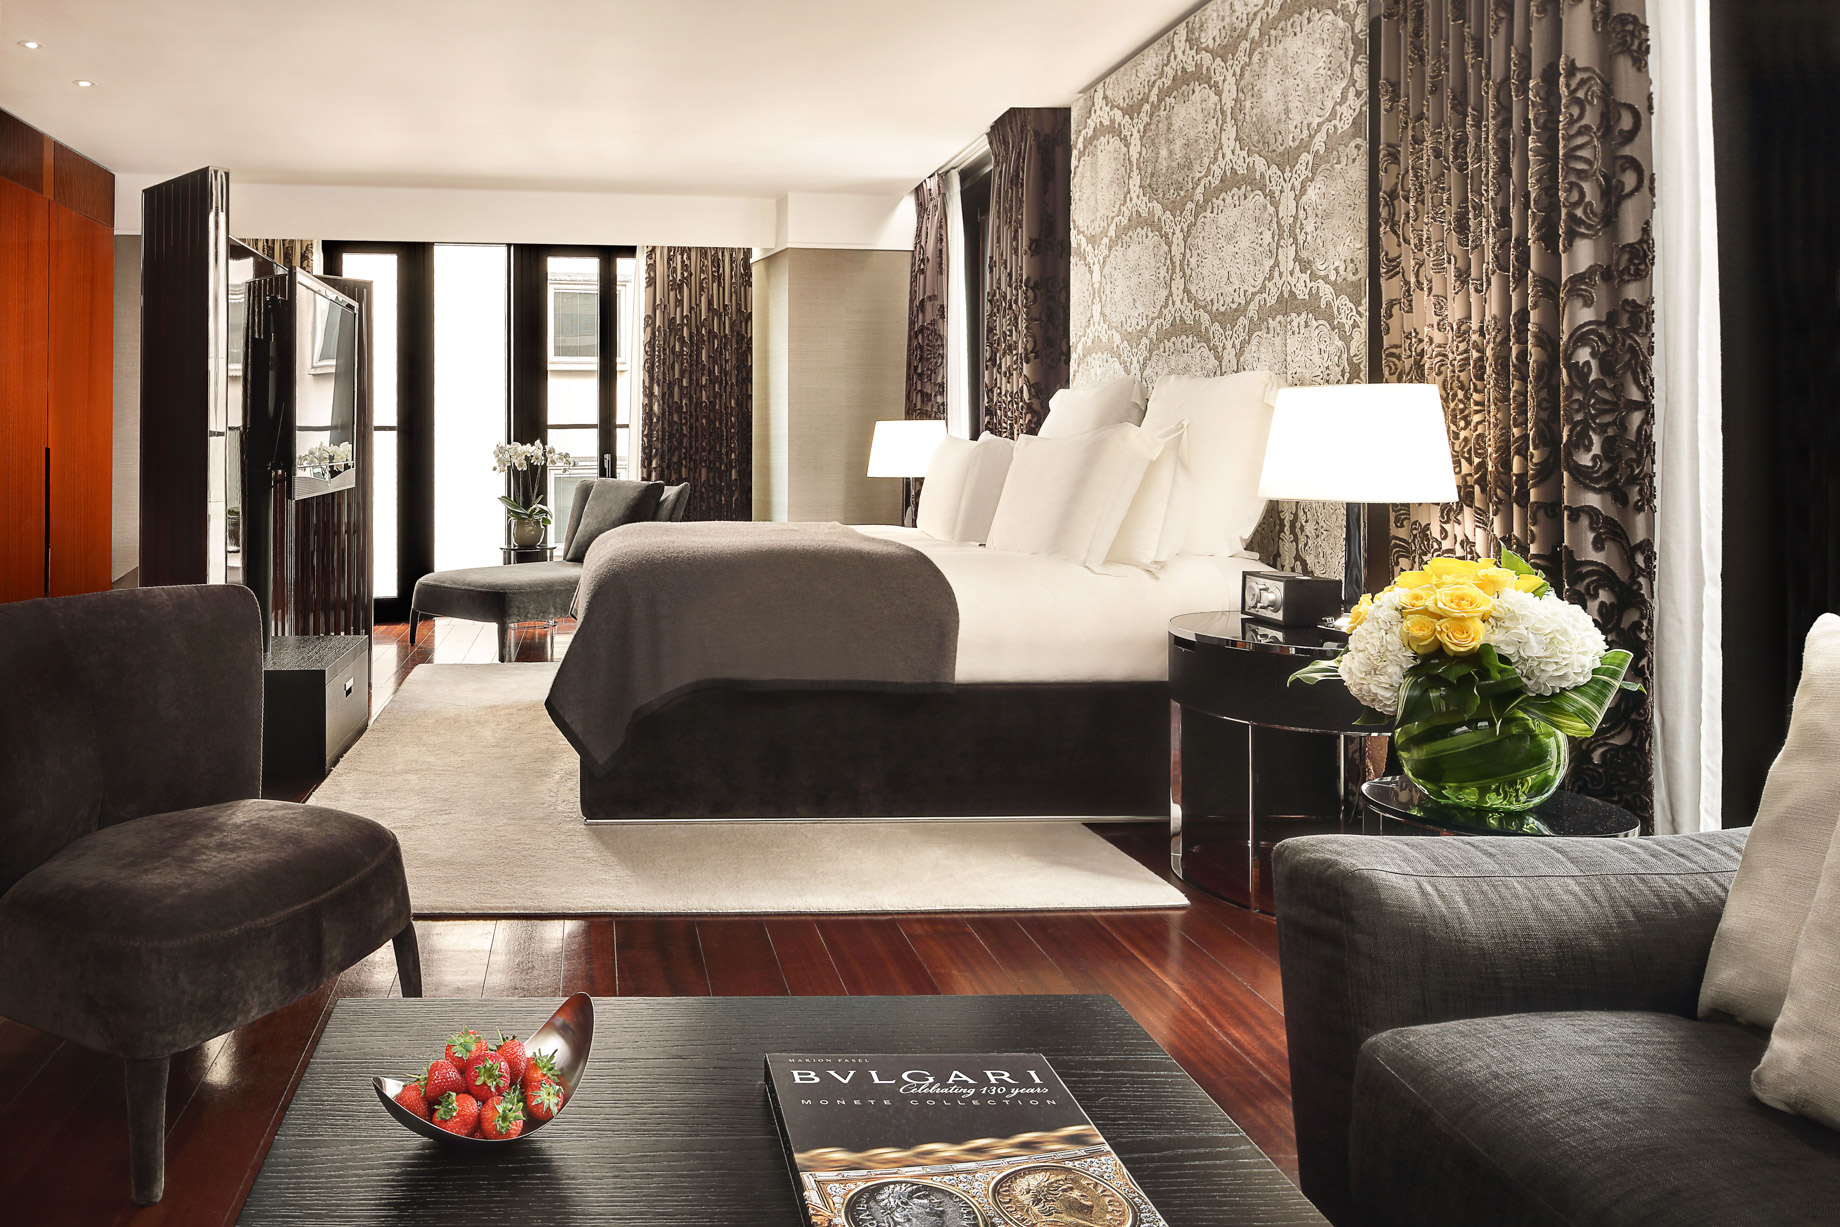 Bvlgari Hotel London – Knightsbridge, London, UK – Studio Suite Bedroom